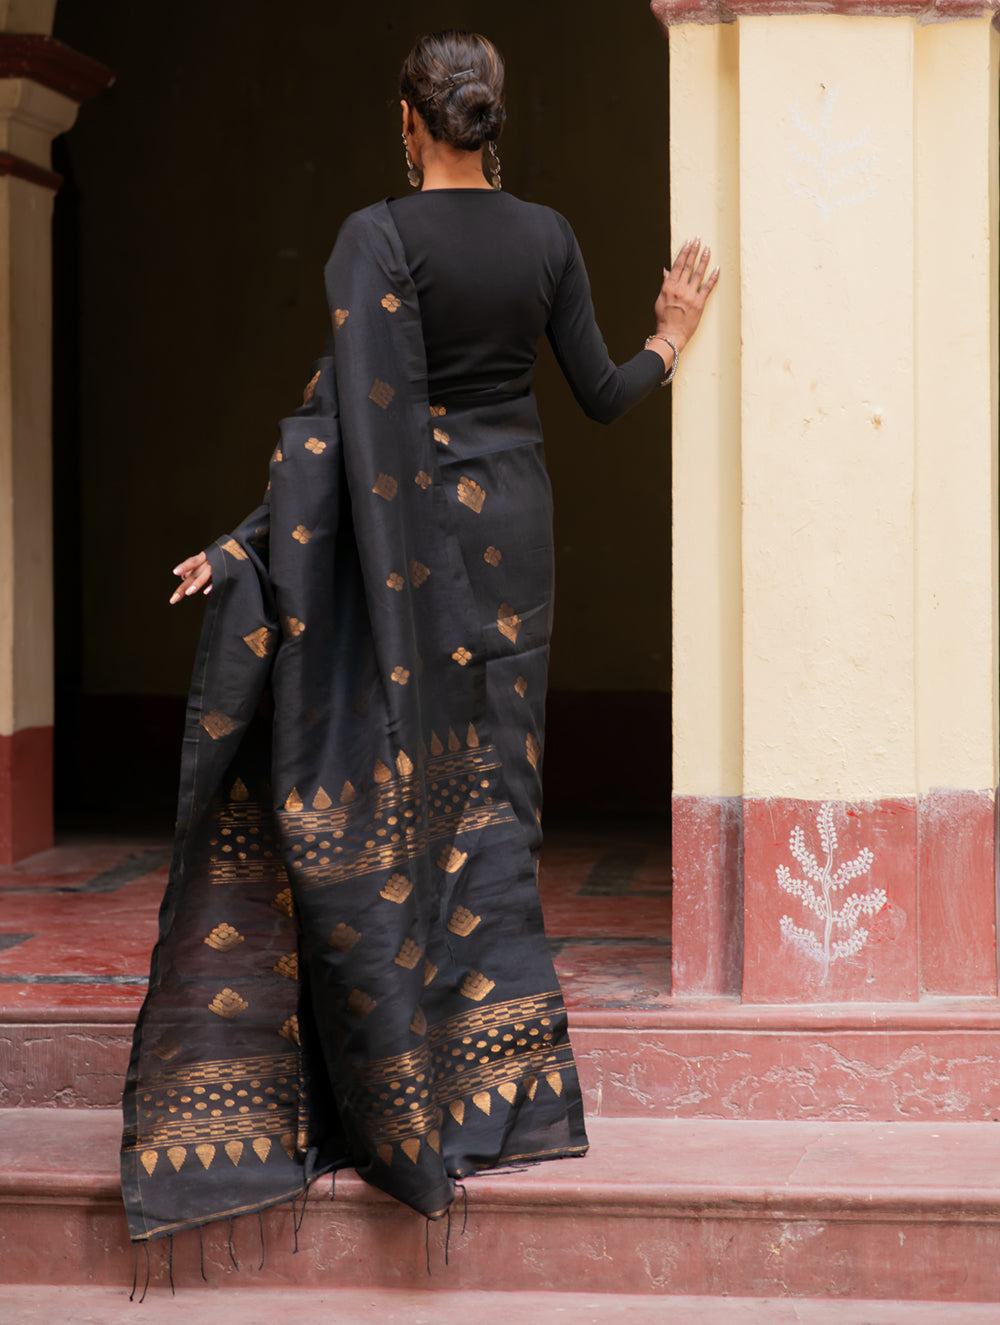 Load image into Gallery viewer, Handwoven Elegance. Exclusive Linen Jamdani Saree - Black Appeal